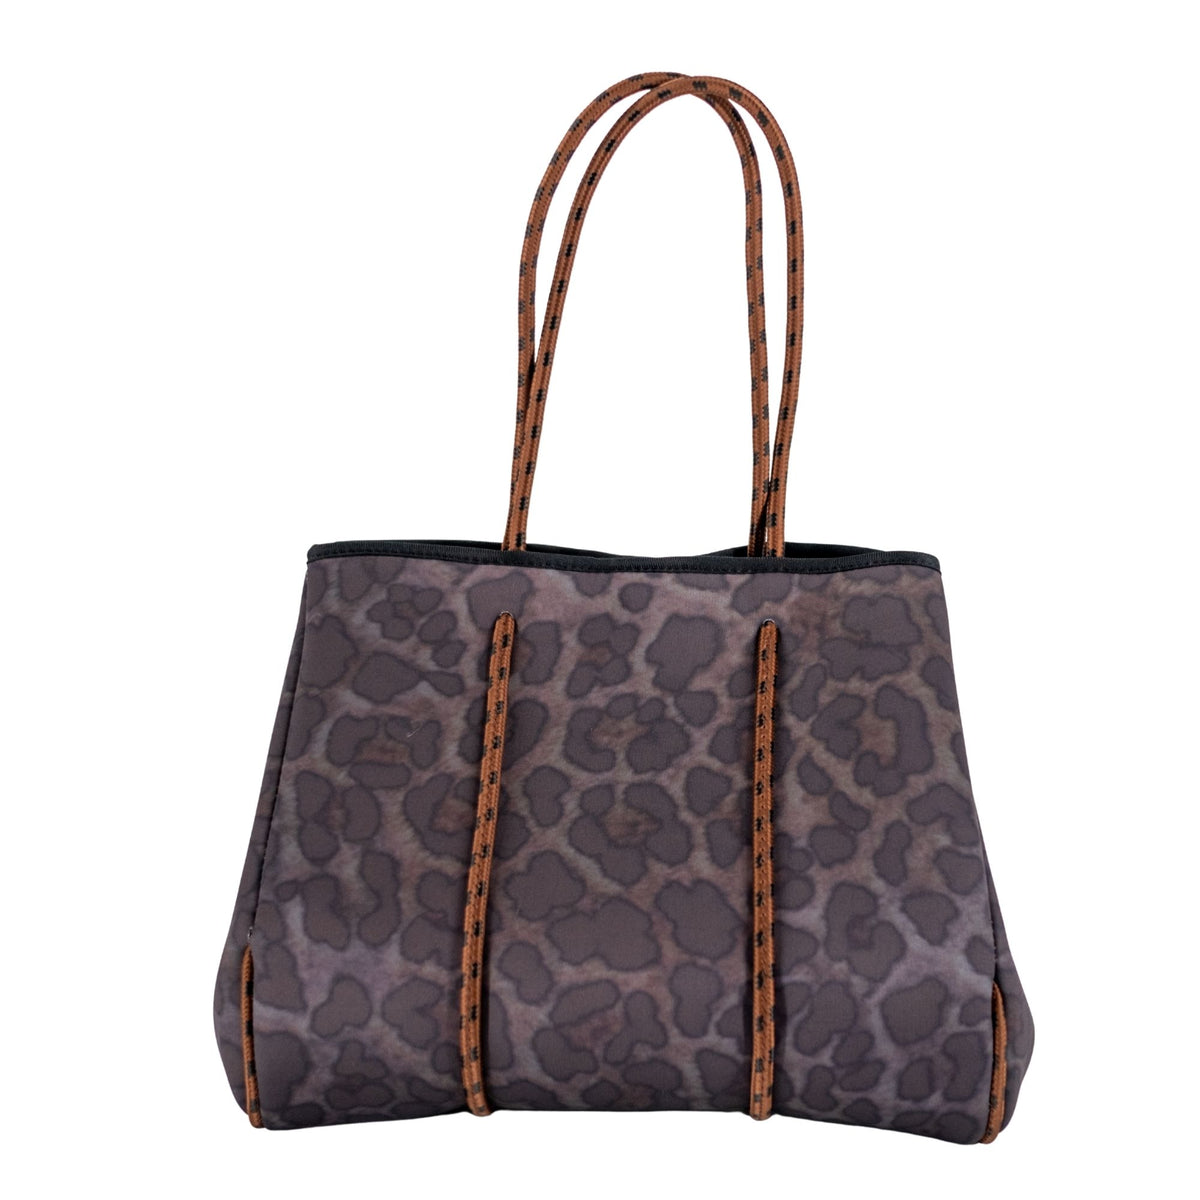 Brown Leopard Print Neoprene Bag in Bag Tote